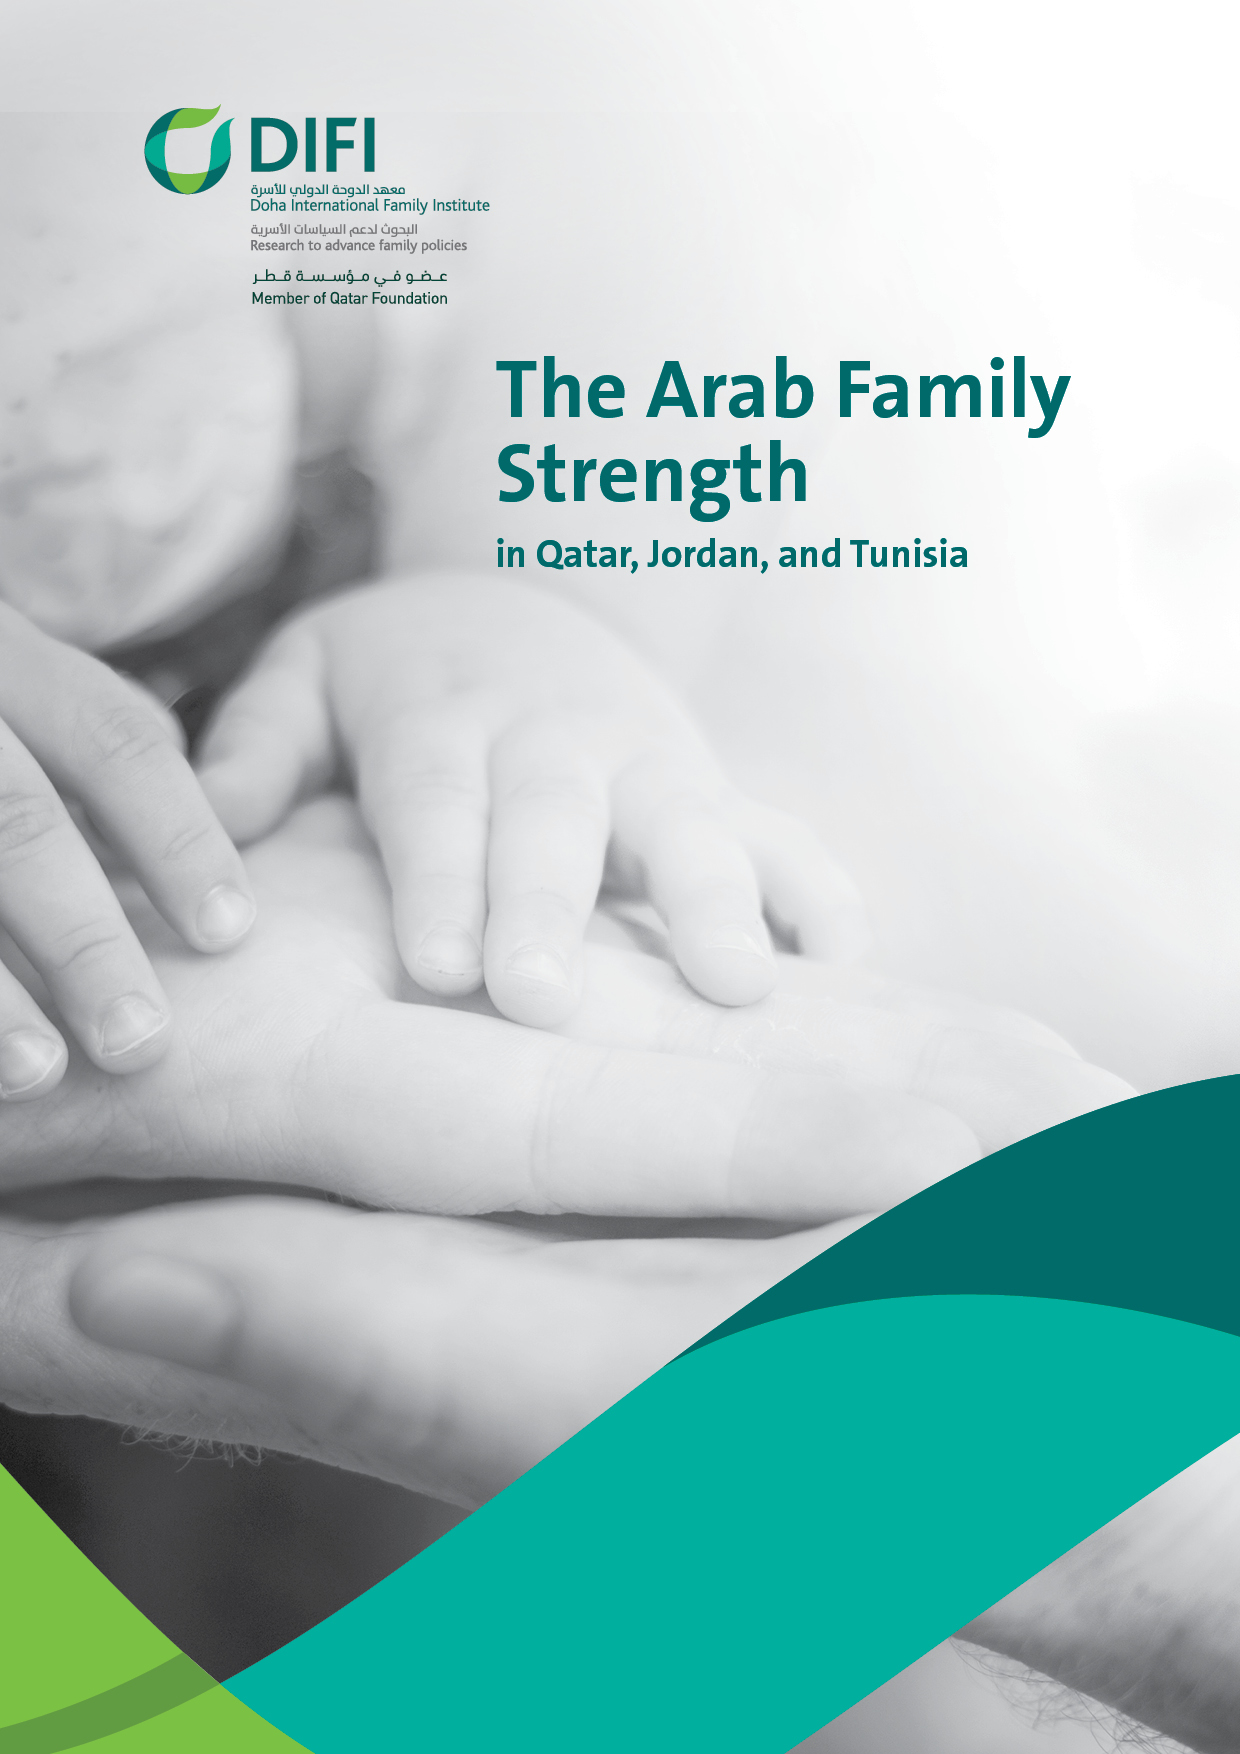 image of Doha International Family Institute (DIFI)